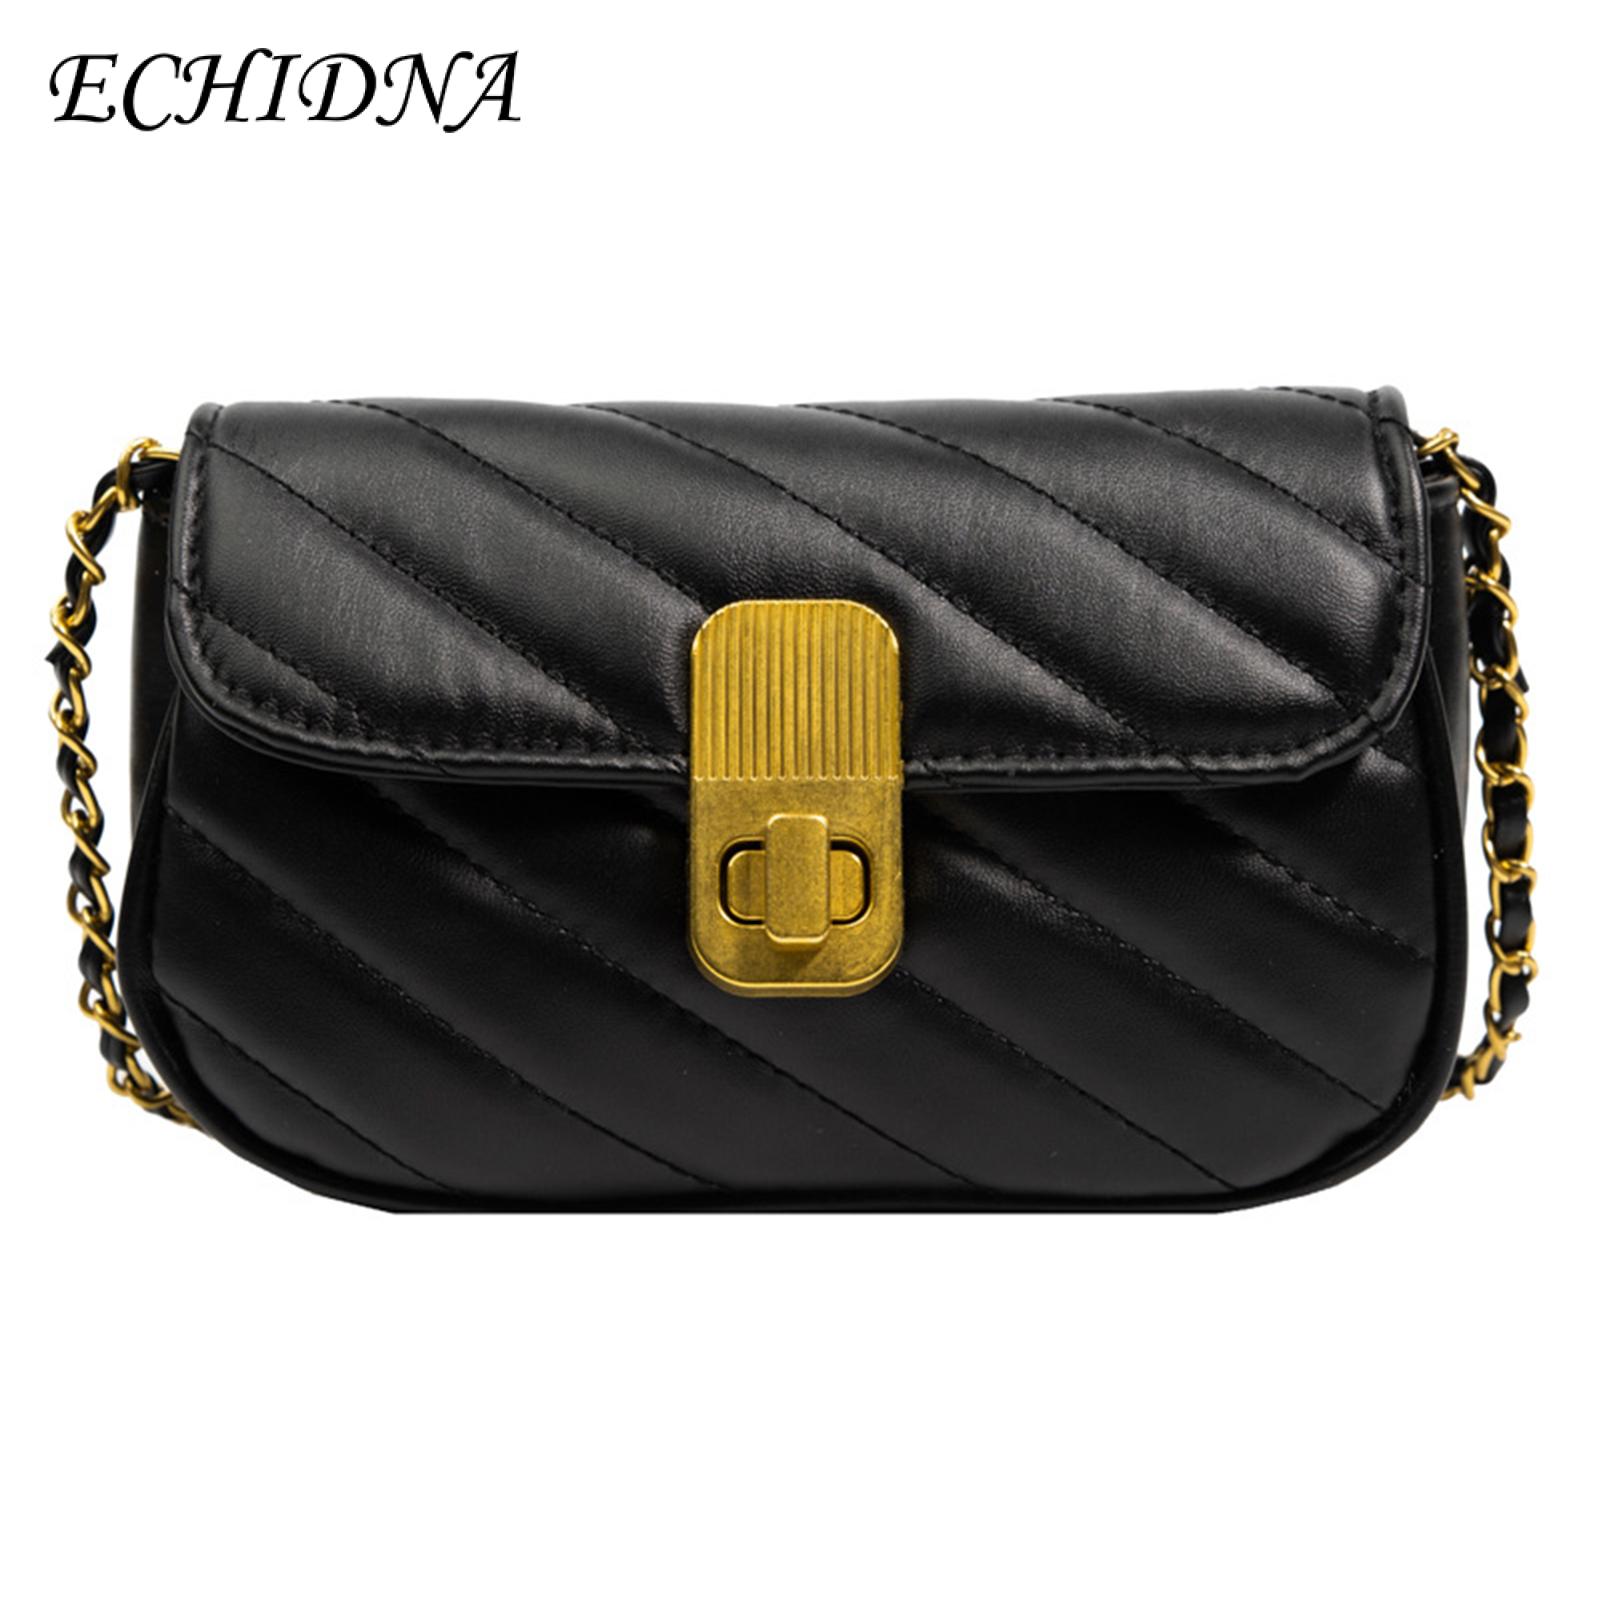 ECHIDNA Small Square Bag Adjustable Trendy Plaid Women Shoulder Bag